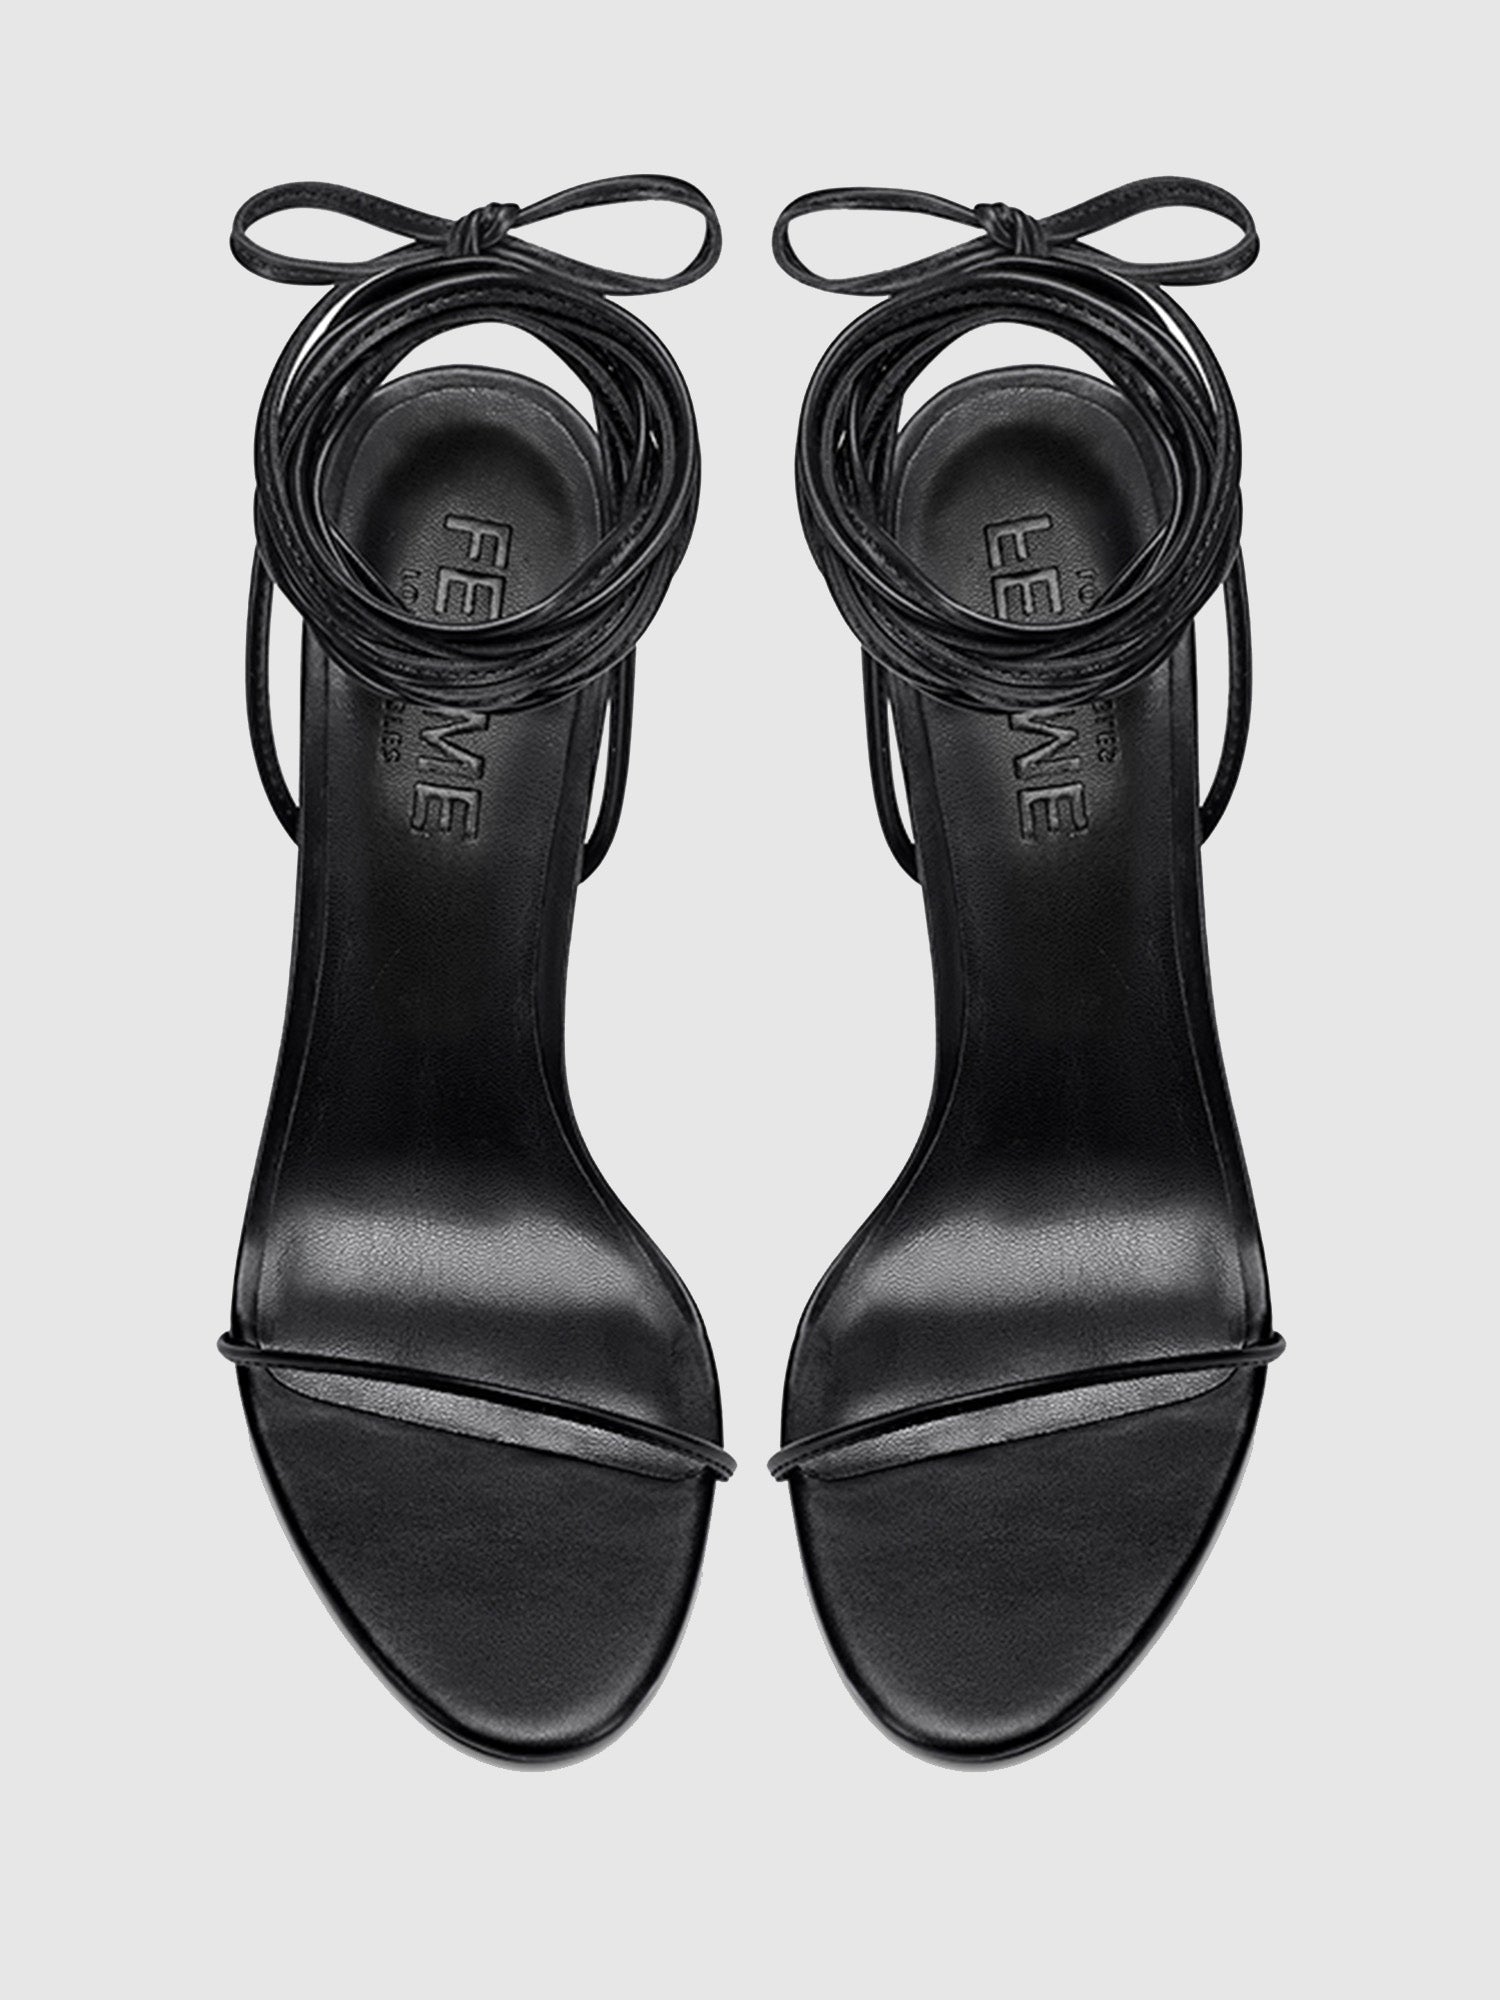 Sandal, high heel block heel platform black 'barely there' sandal